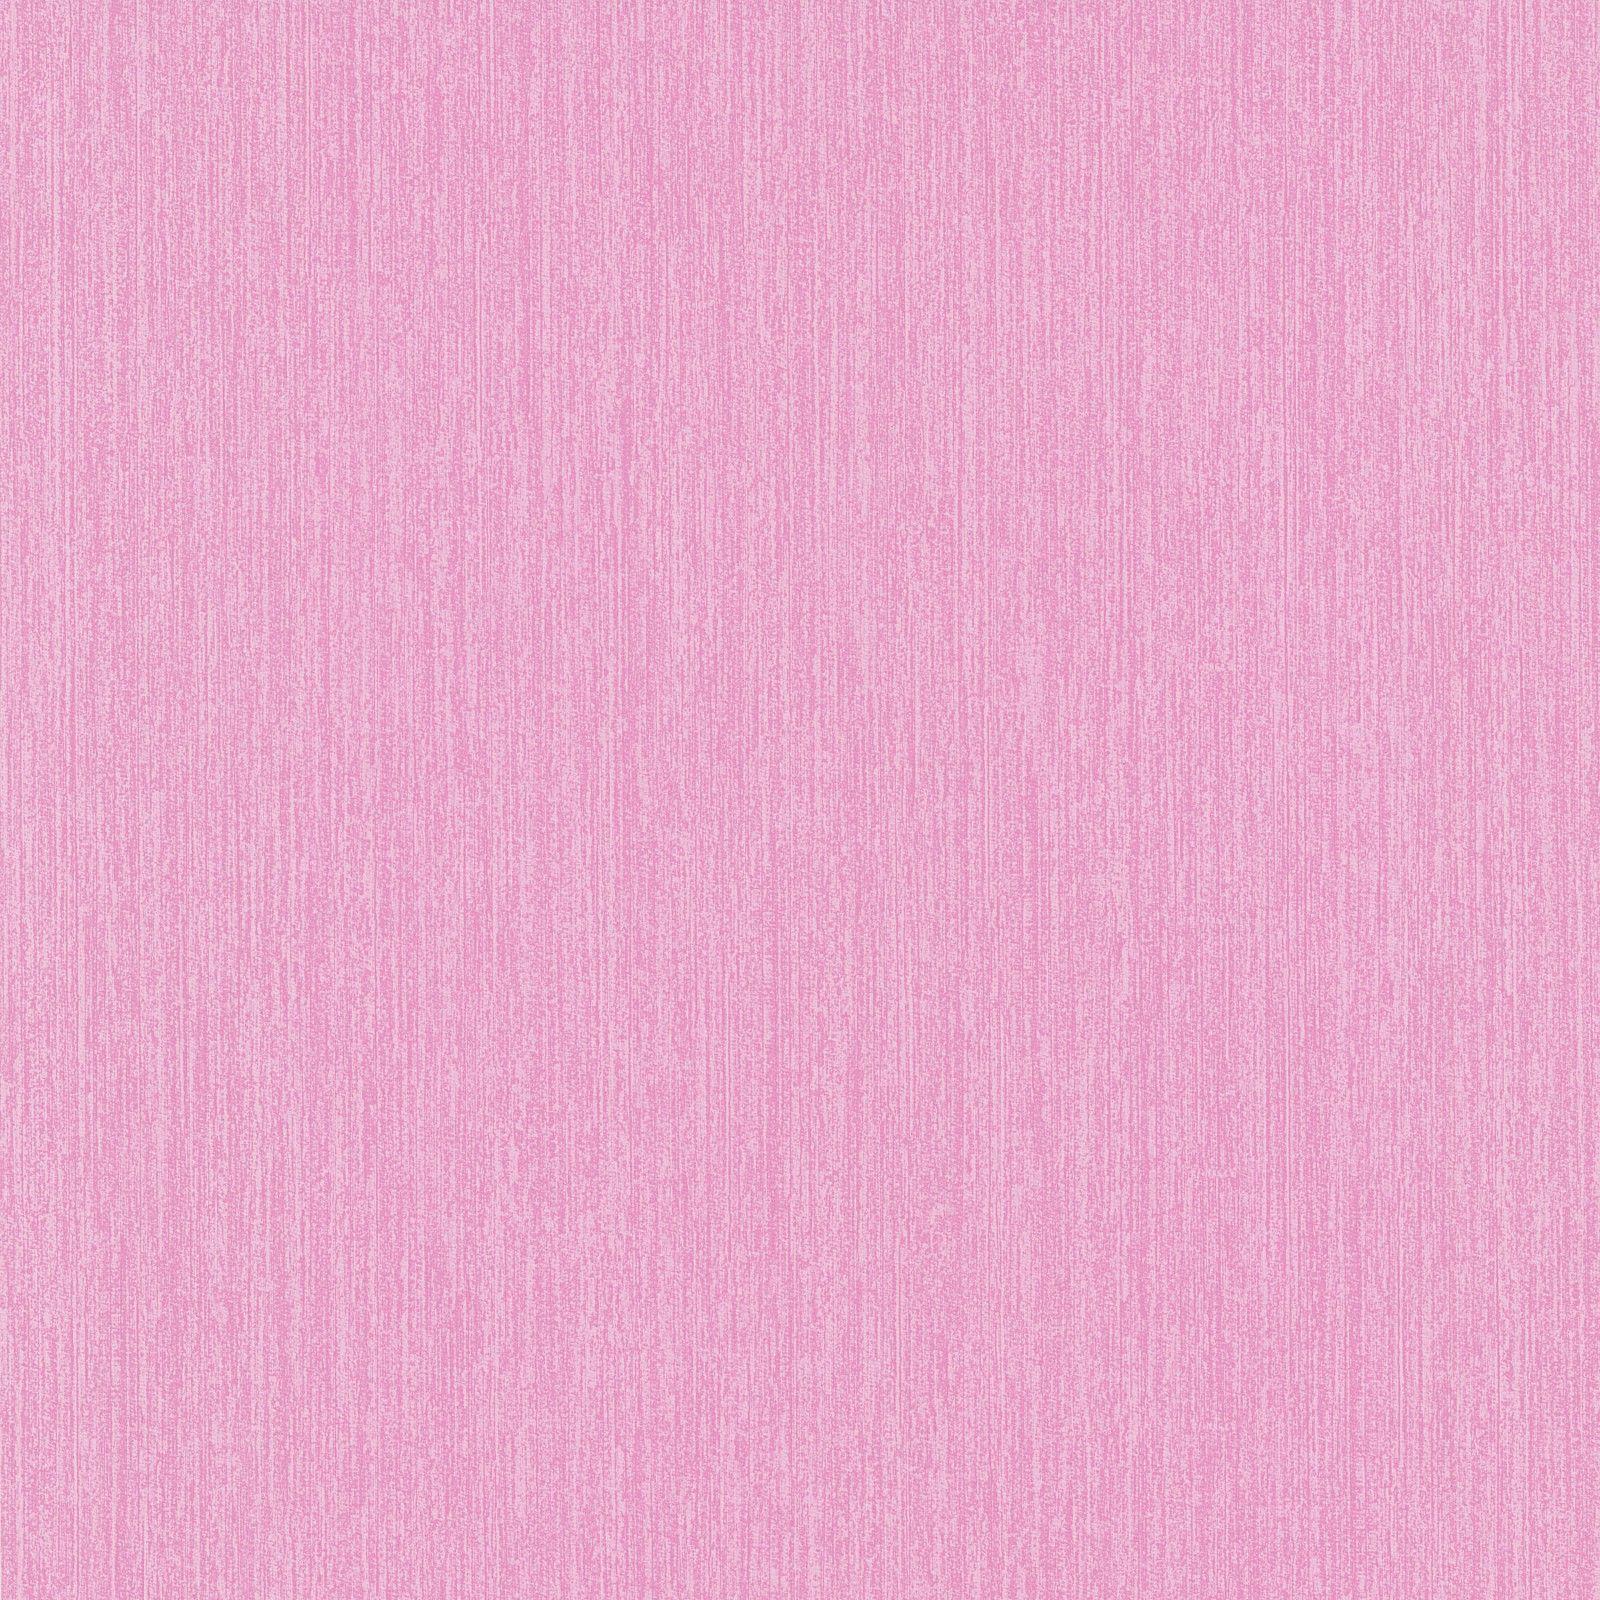 Wallpaper Uni Rose P S International X Treme Color 05565 70